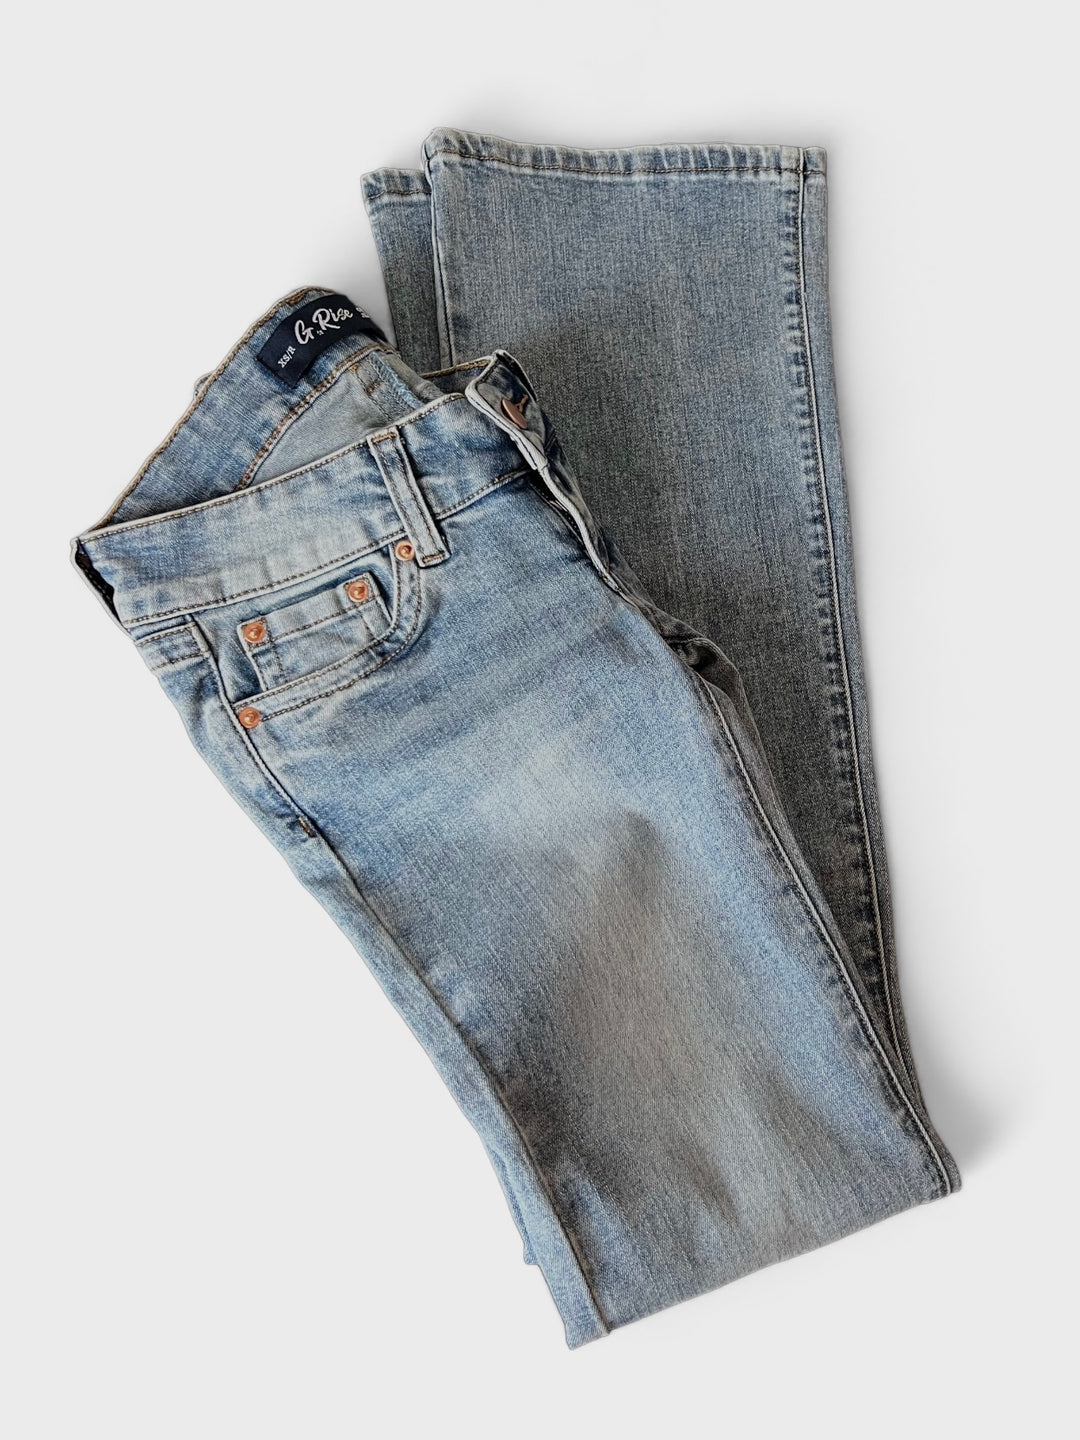 G Rise Gena Jeans - Original Vintage